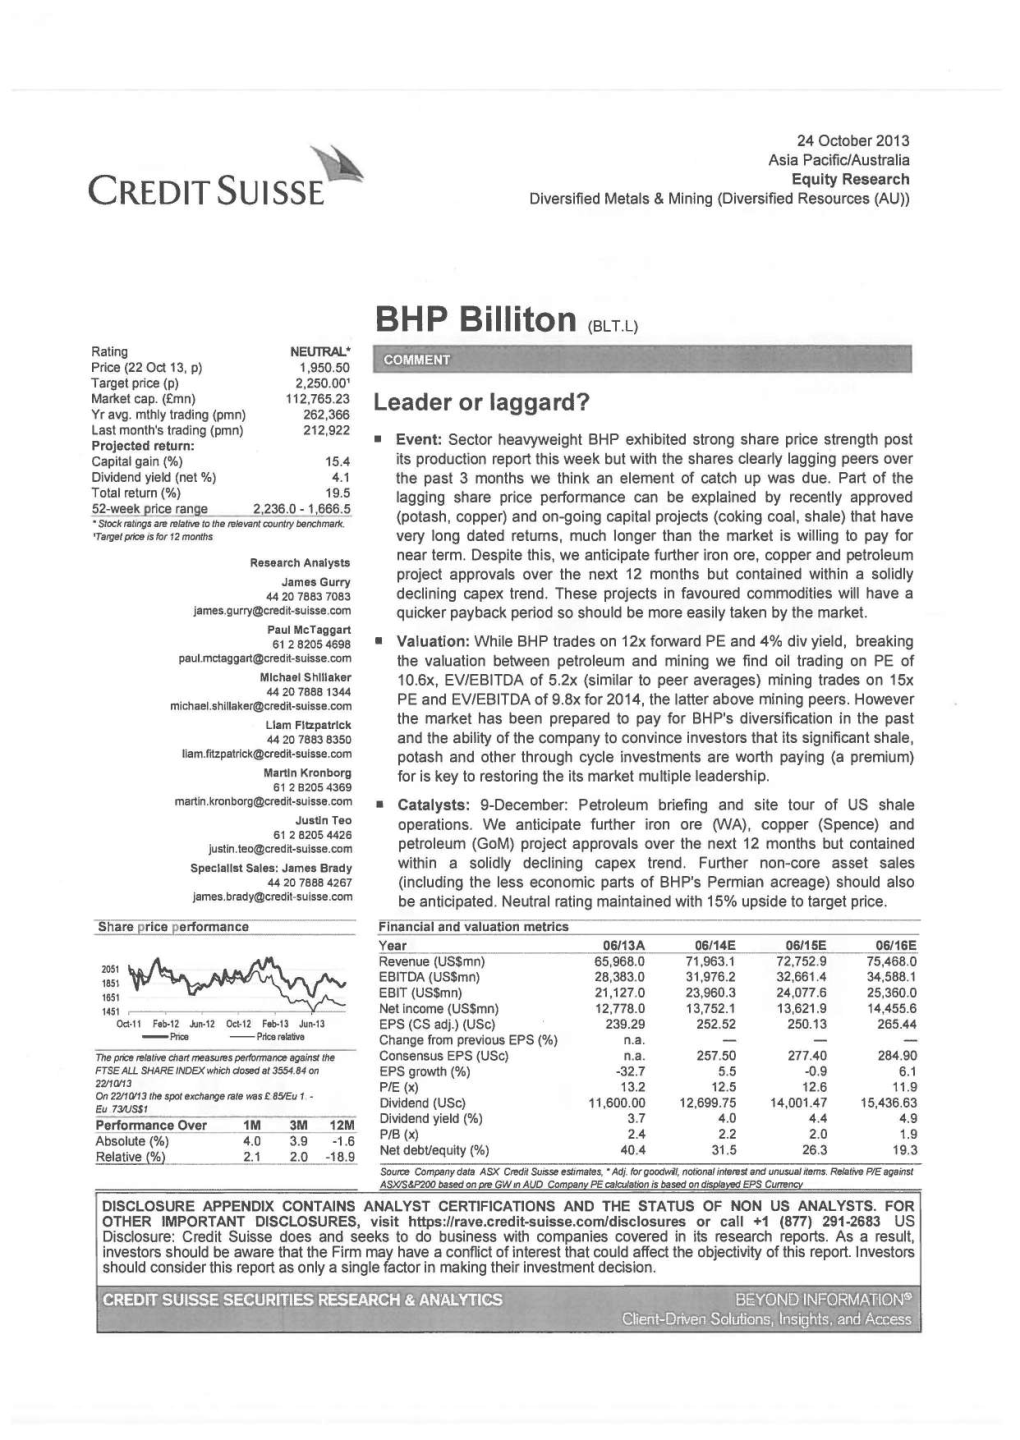 BHP Billiton (BLT.L) Rating NEUTRAL*